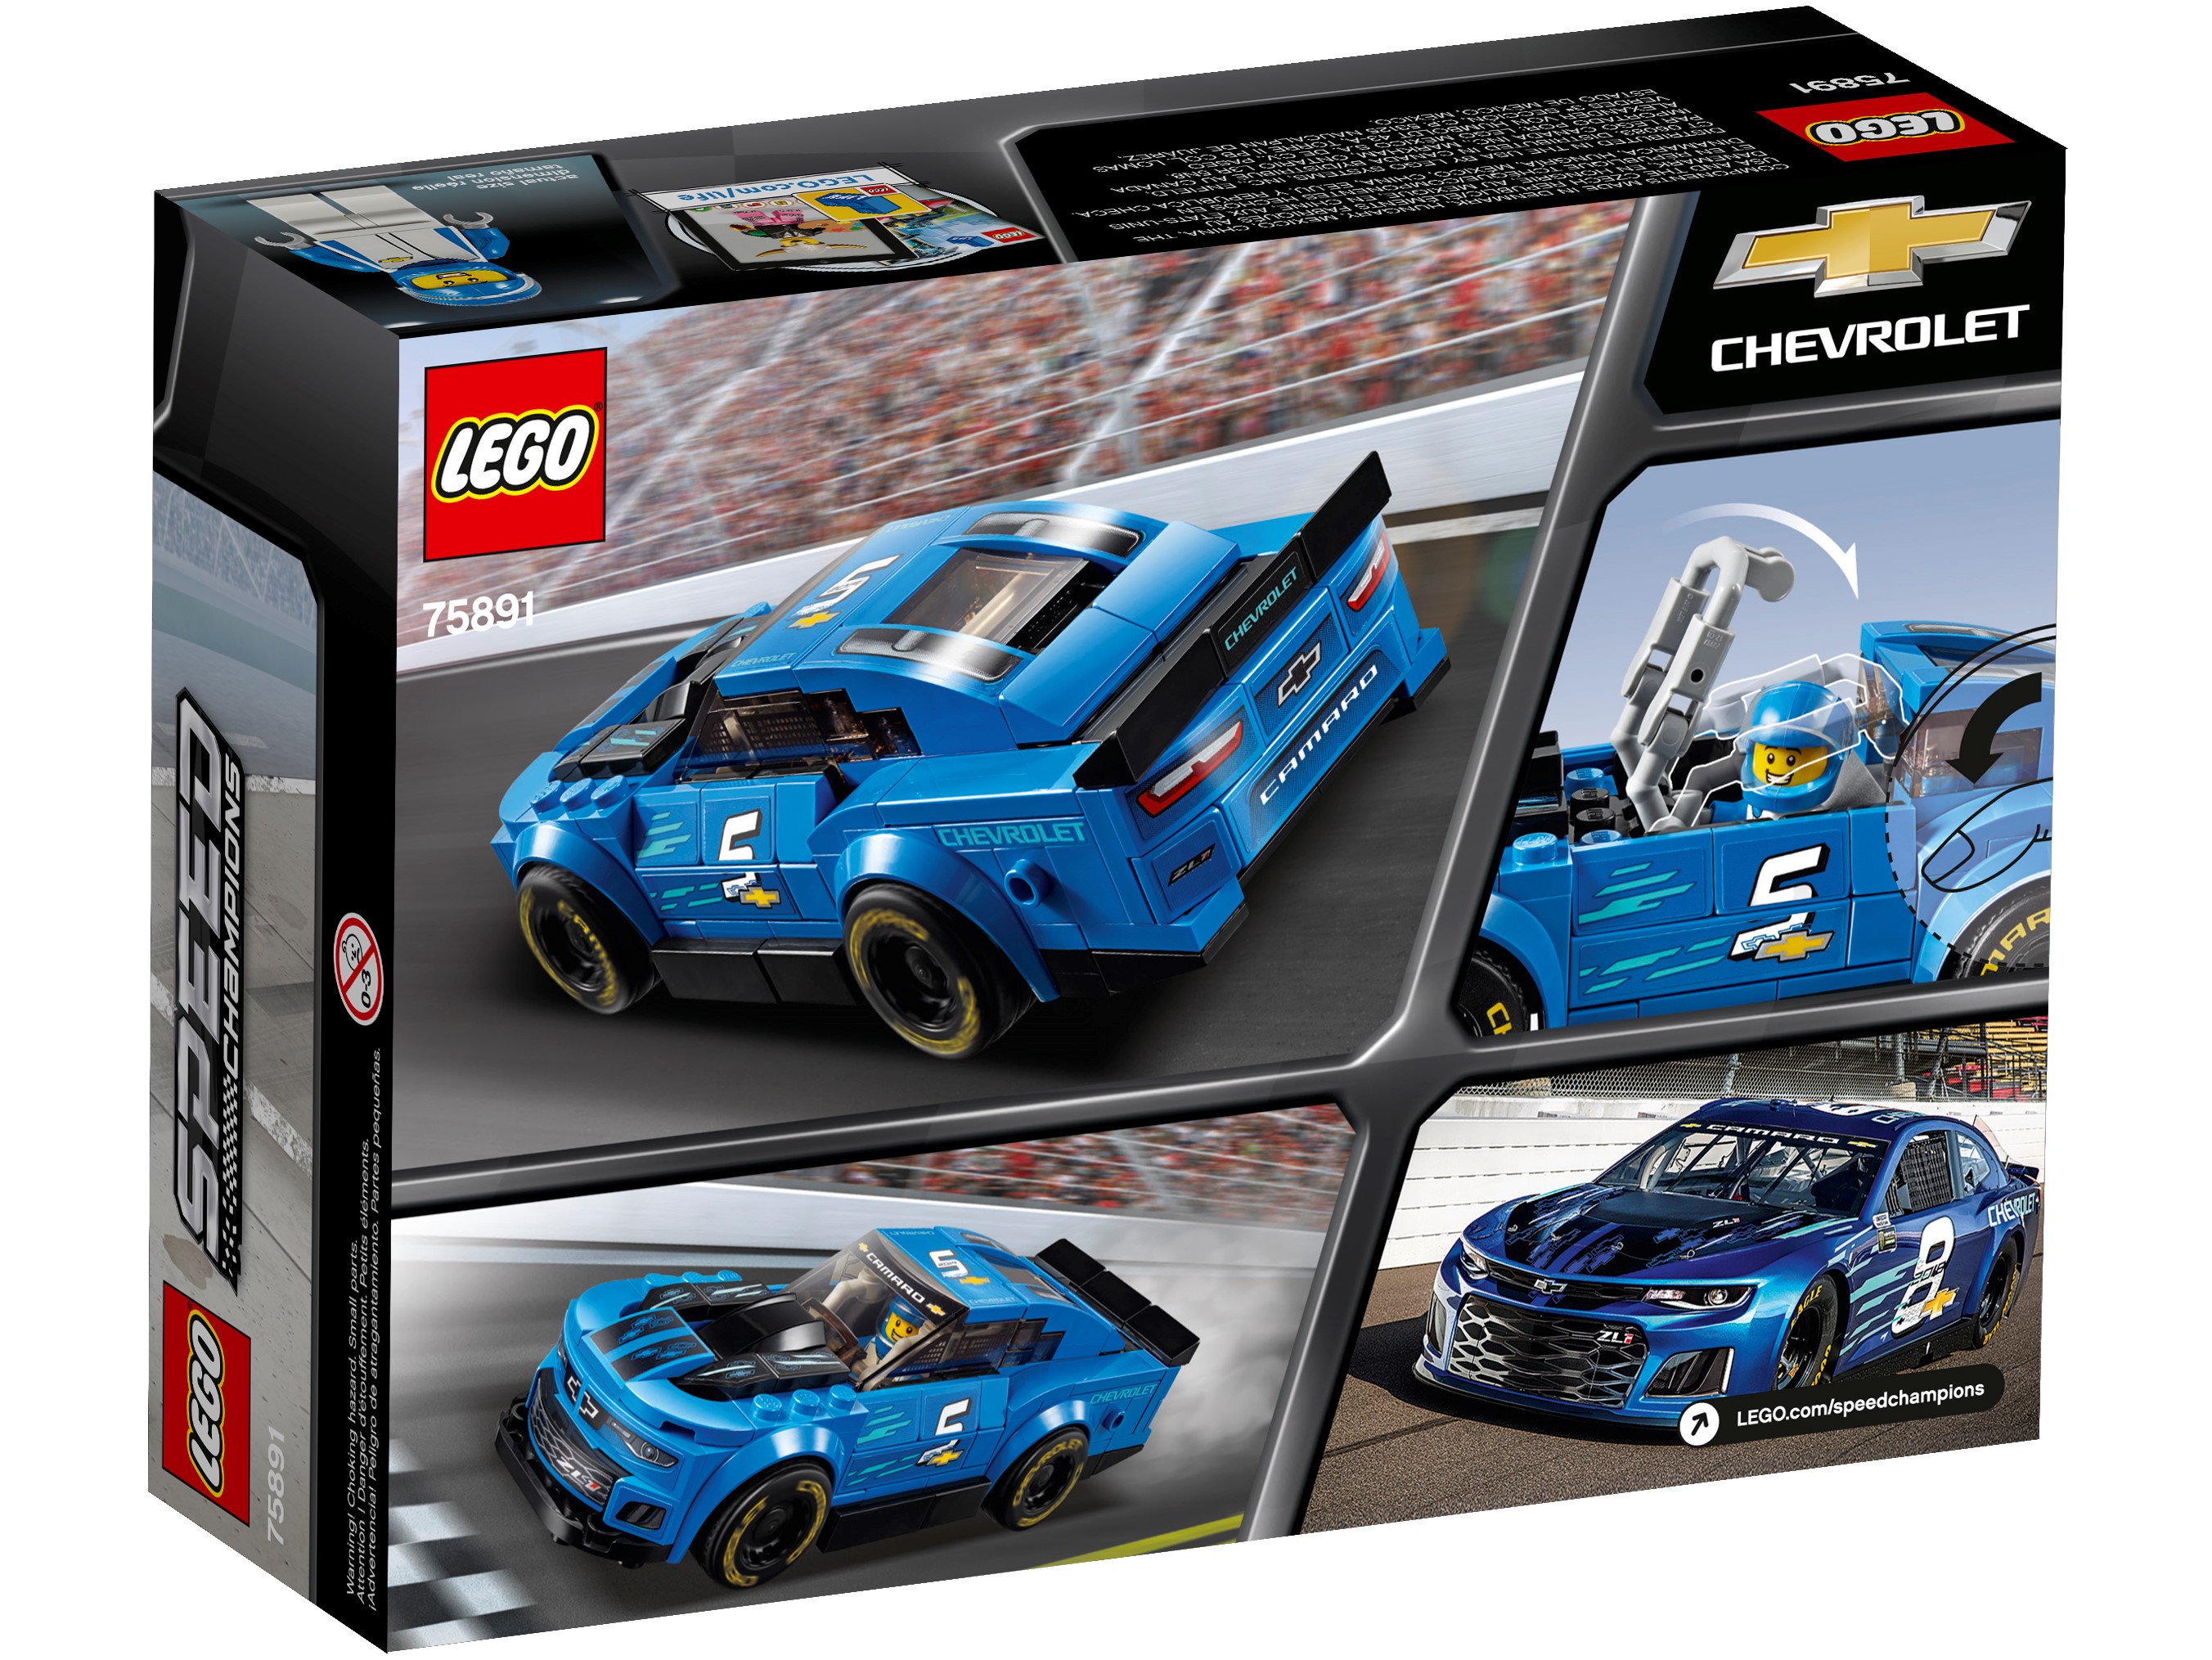 LEGO Speed Champions Chevrolet Camaro ZL1 race car 75891 